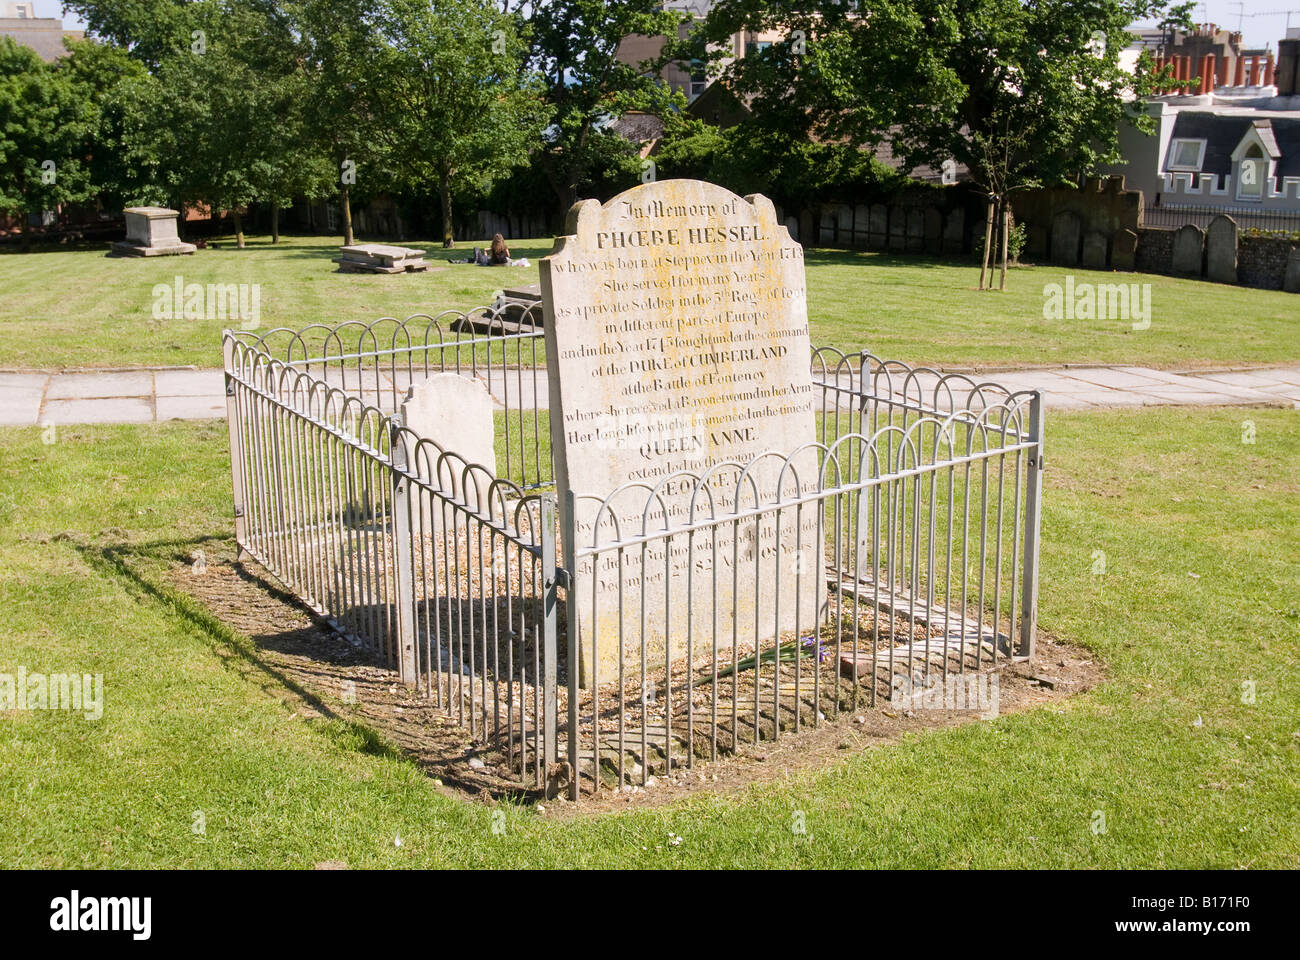 The gravestone of Phoebe Hessel in the churchyard of St Nicholas, Brighton. Stock Photo